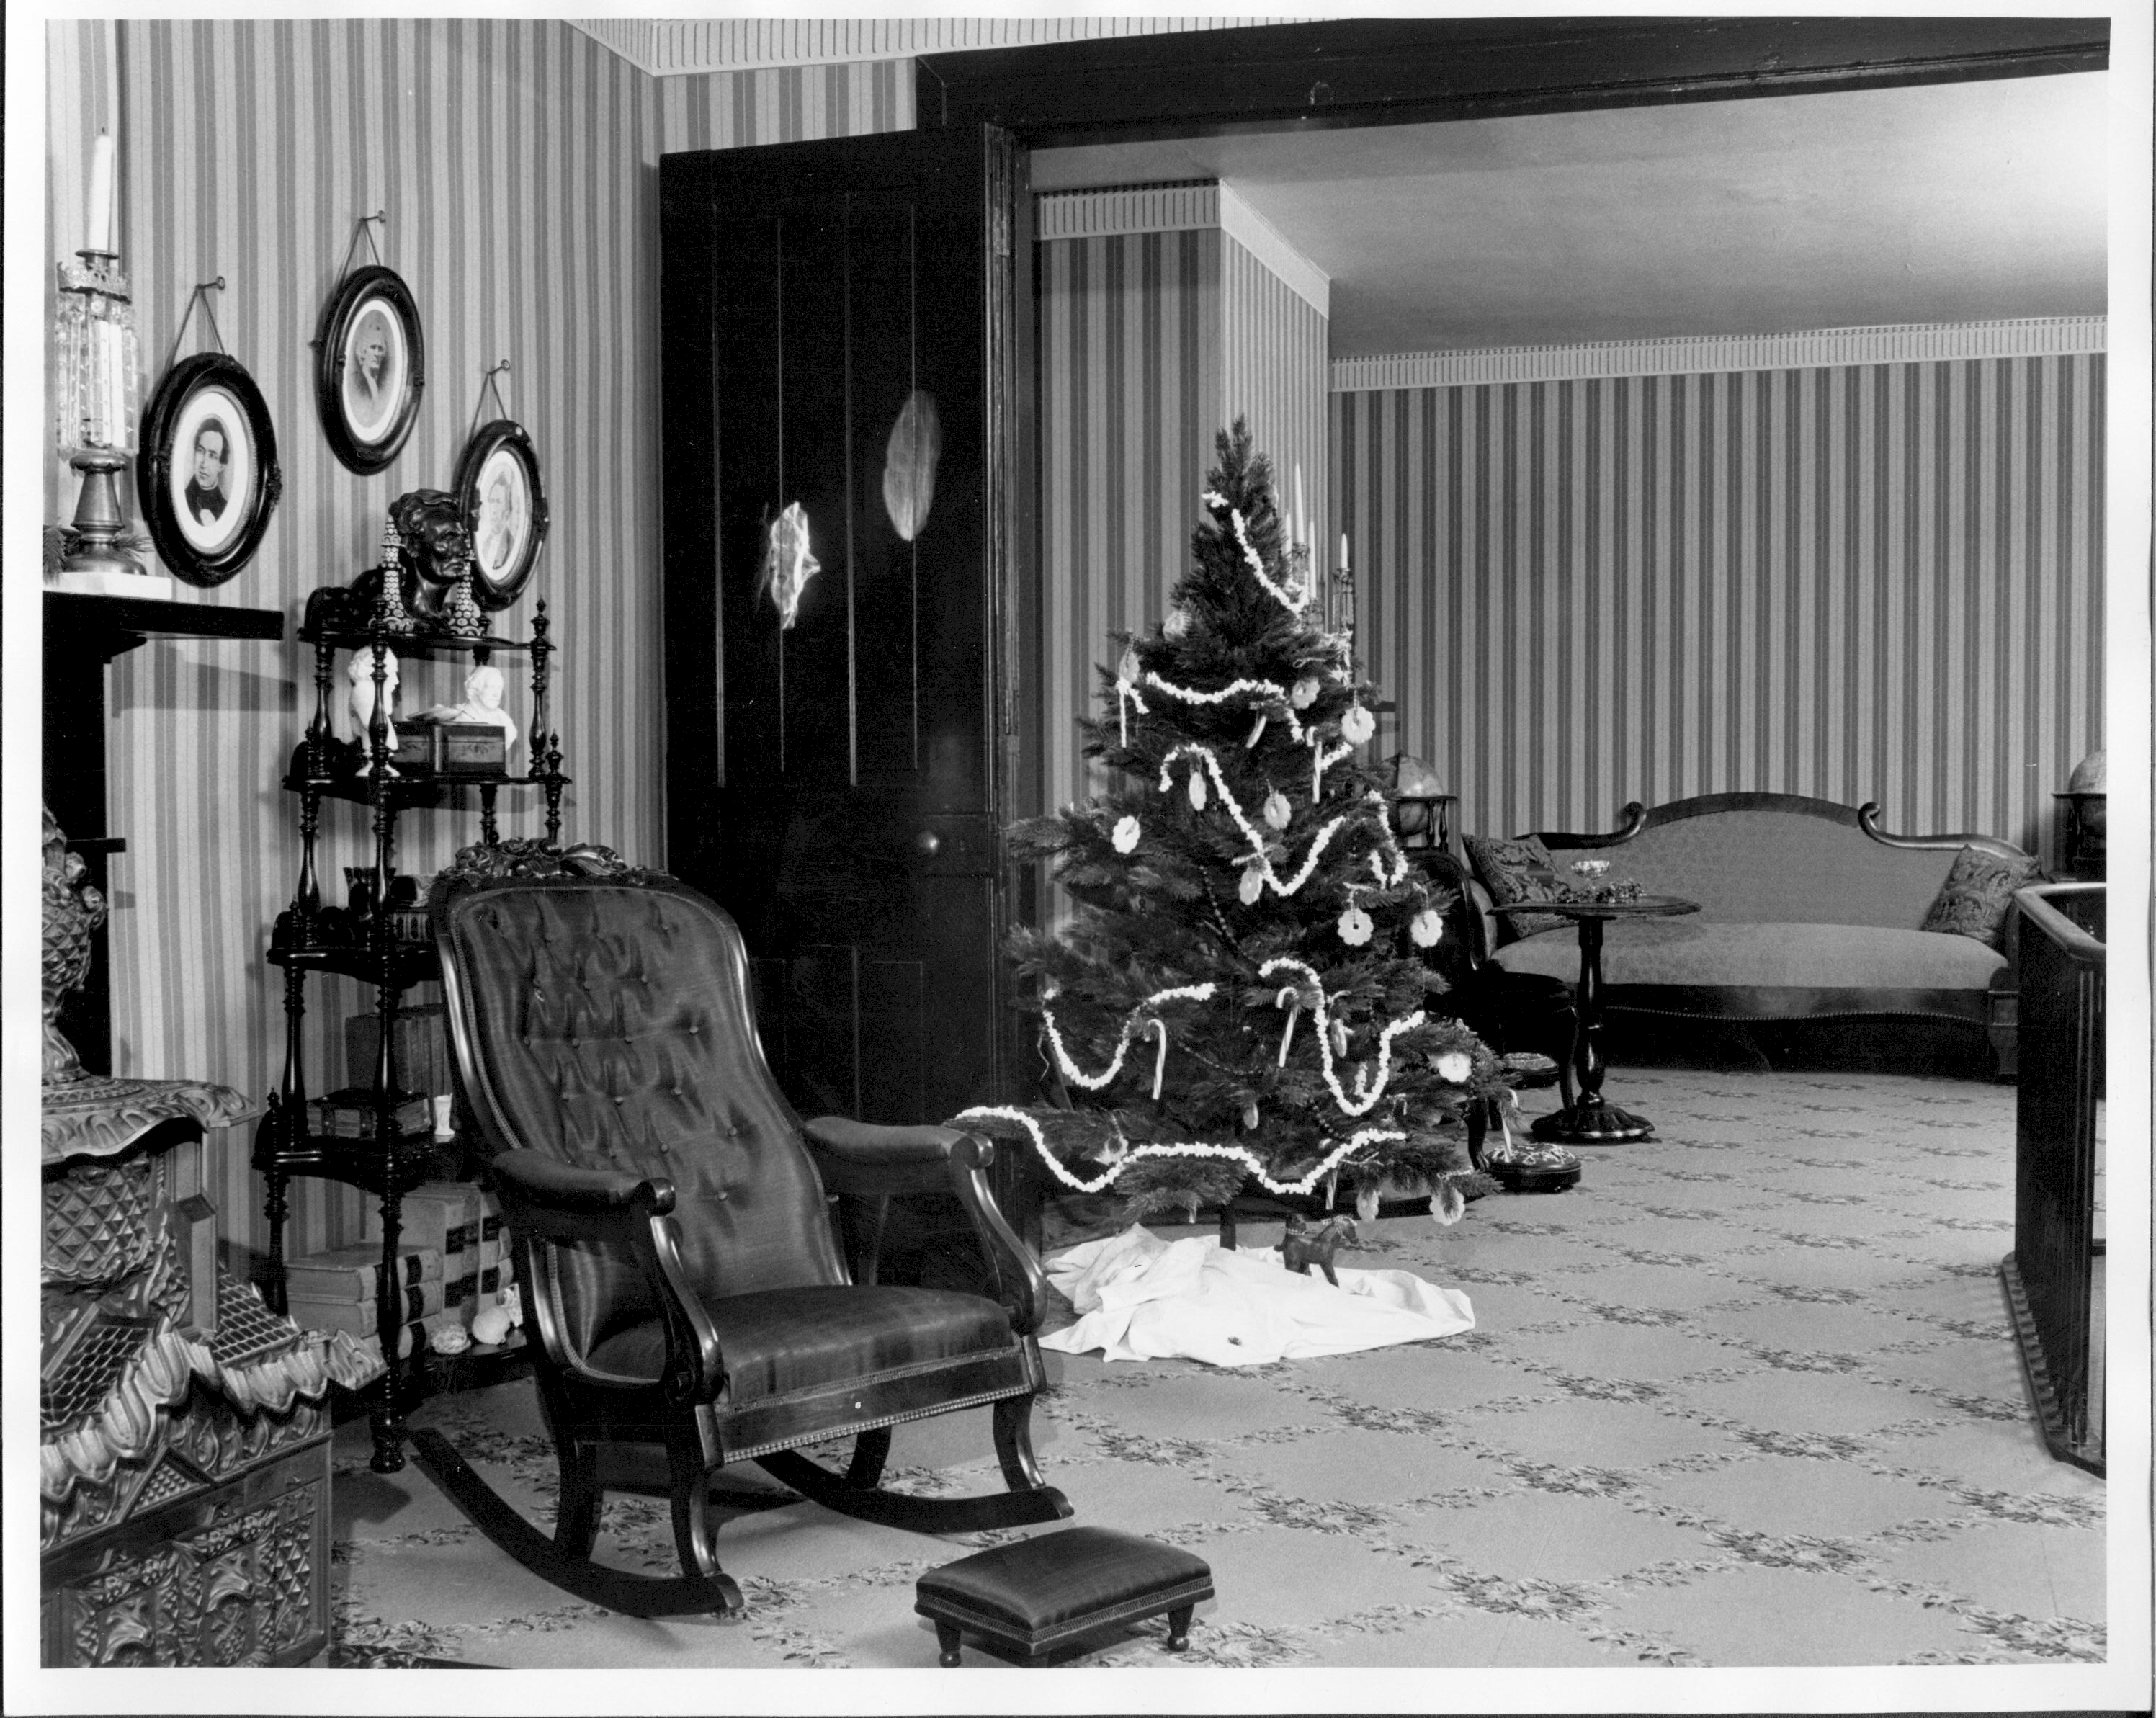 NA pic.#6, class.#7; Job#177-1 Lincoln, Home, Sitting, Room, Parlor, Christmas Tree